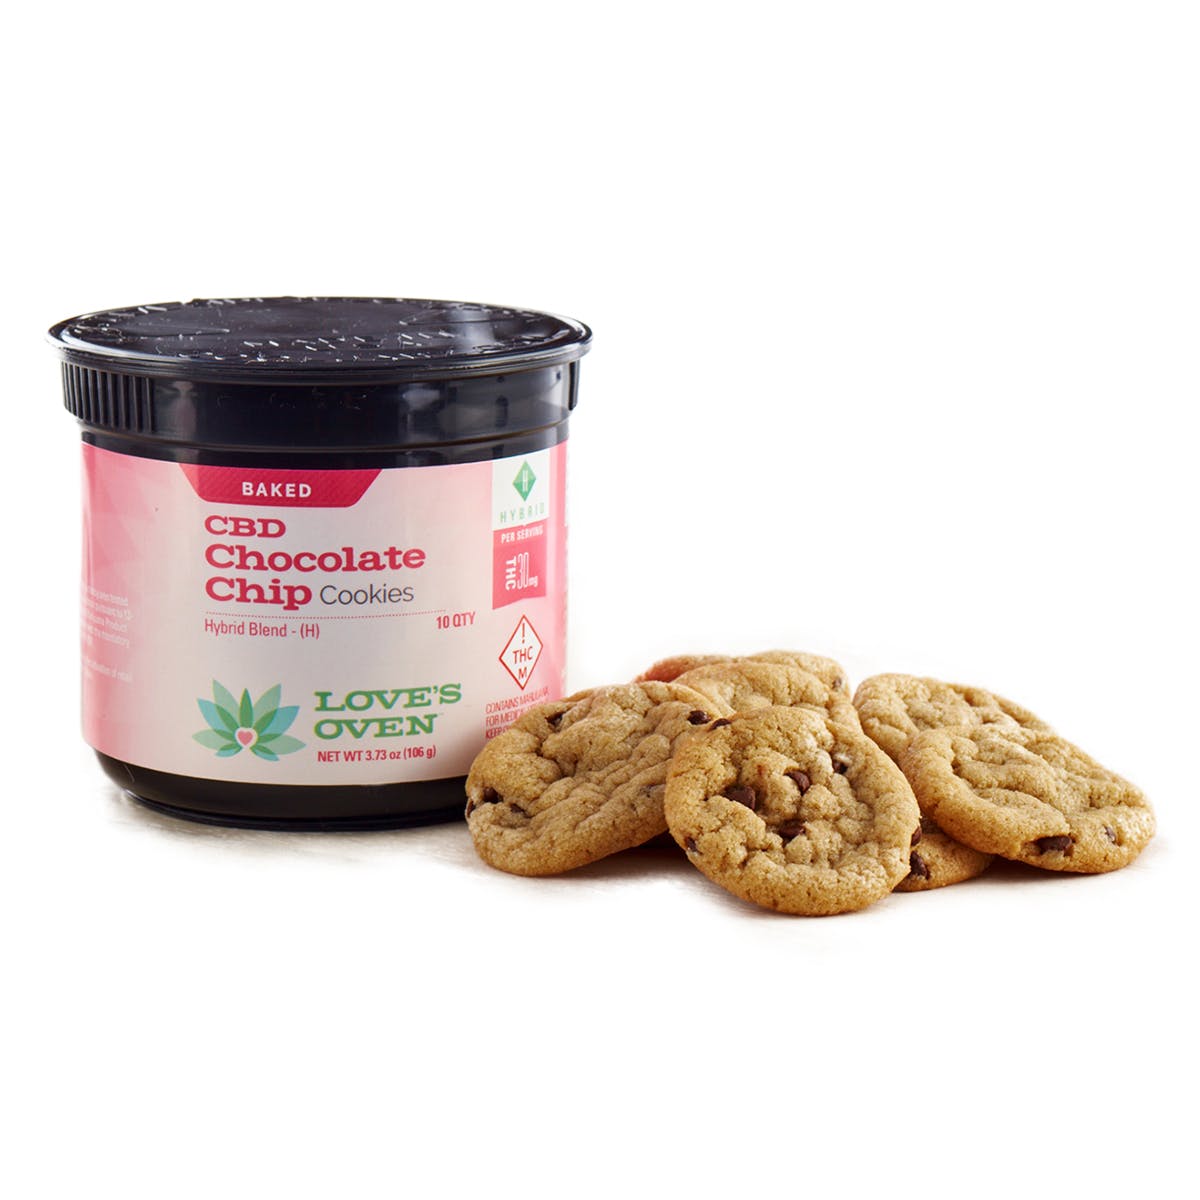 marijuana-dispensaries-buddy-boy-baker-med-18-2b-in-denver-medical-cbd-chocolate-chip-cookies-2c-300mg